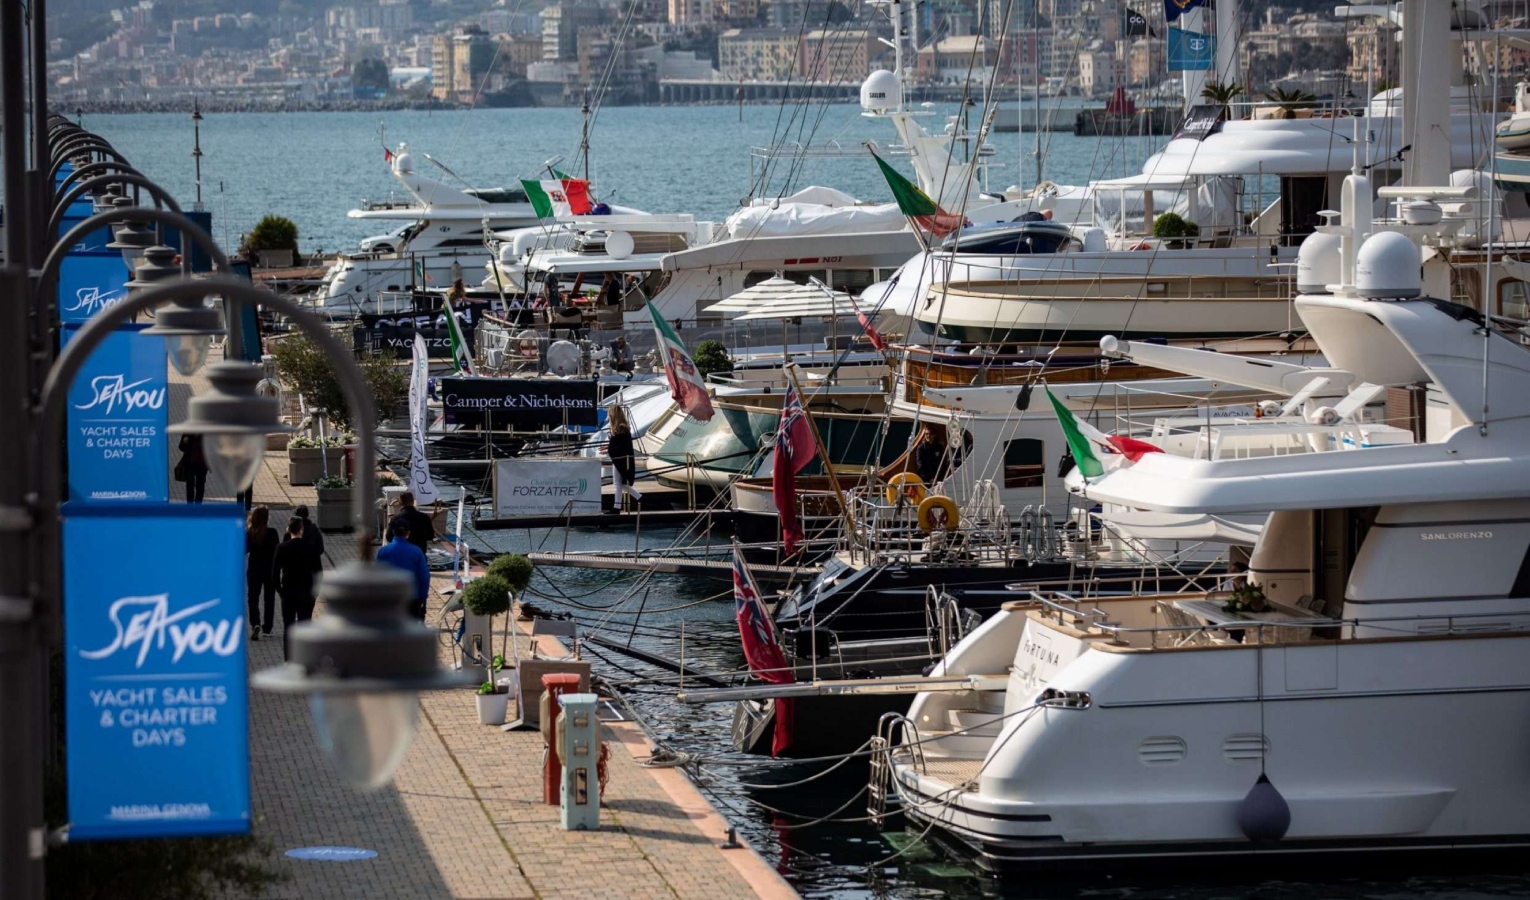 Sea You a Genova, Costaguta (Genova For Yachting): 